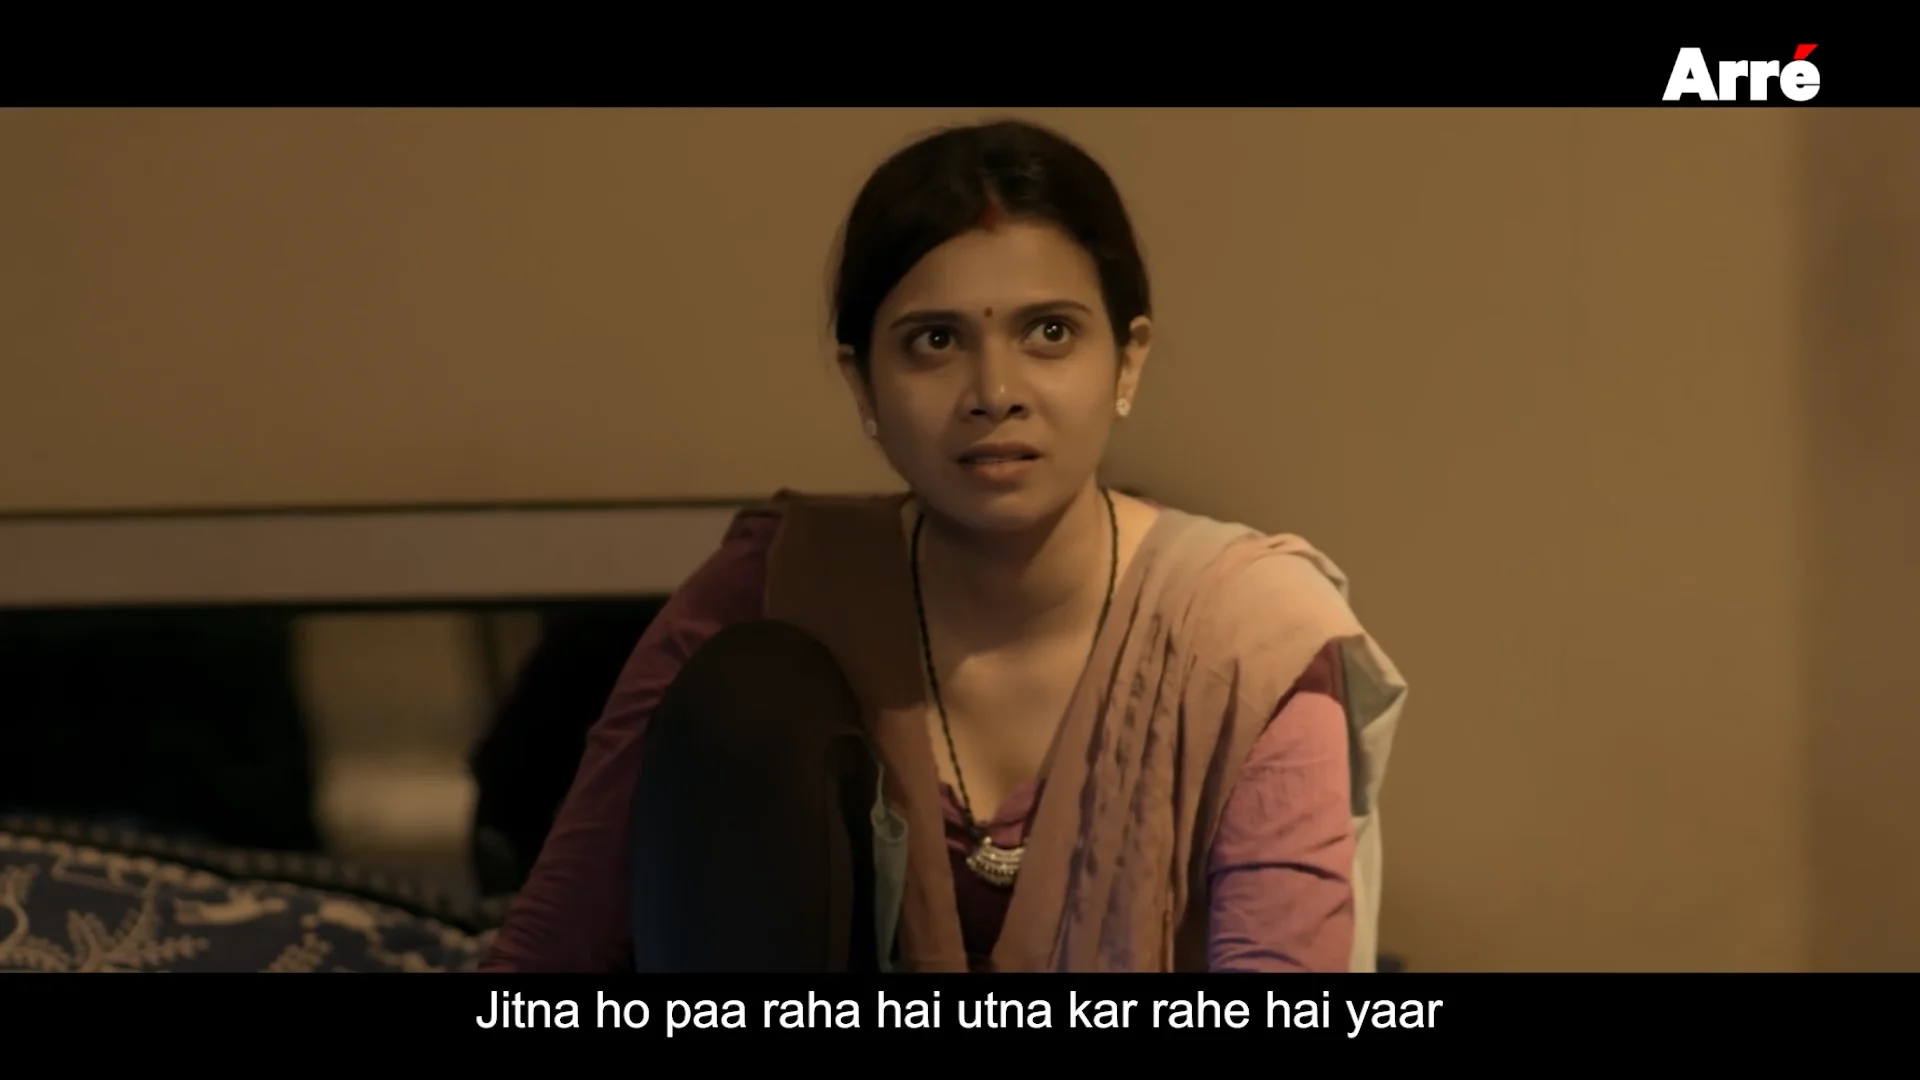 Shreya Sex Video - Pati, Patni Aur Washing Machine (à¤ªà¤¤à¤¿ à¤ªà¤¤à¥à¤¨à¥€ à¤”à¤° à¤µà¤¾à¤¶à¤¿à¤‚à¤— à¤®à¤¶à¥€à¤¨) ft. Shreya Gupto  & Nikhil Vijay (1080p) on Vimeo